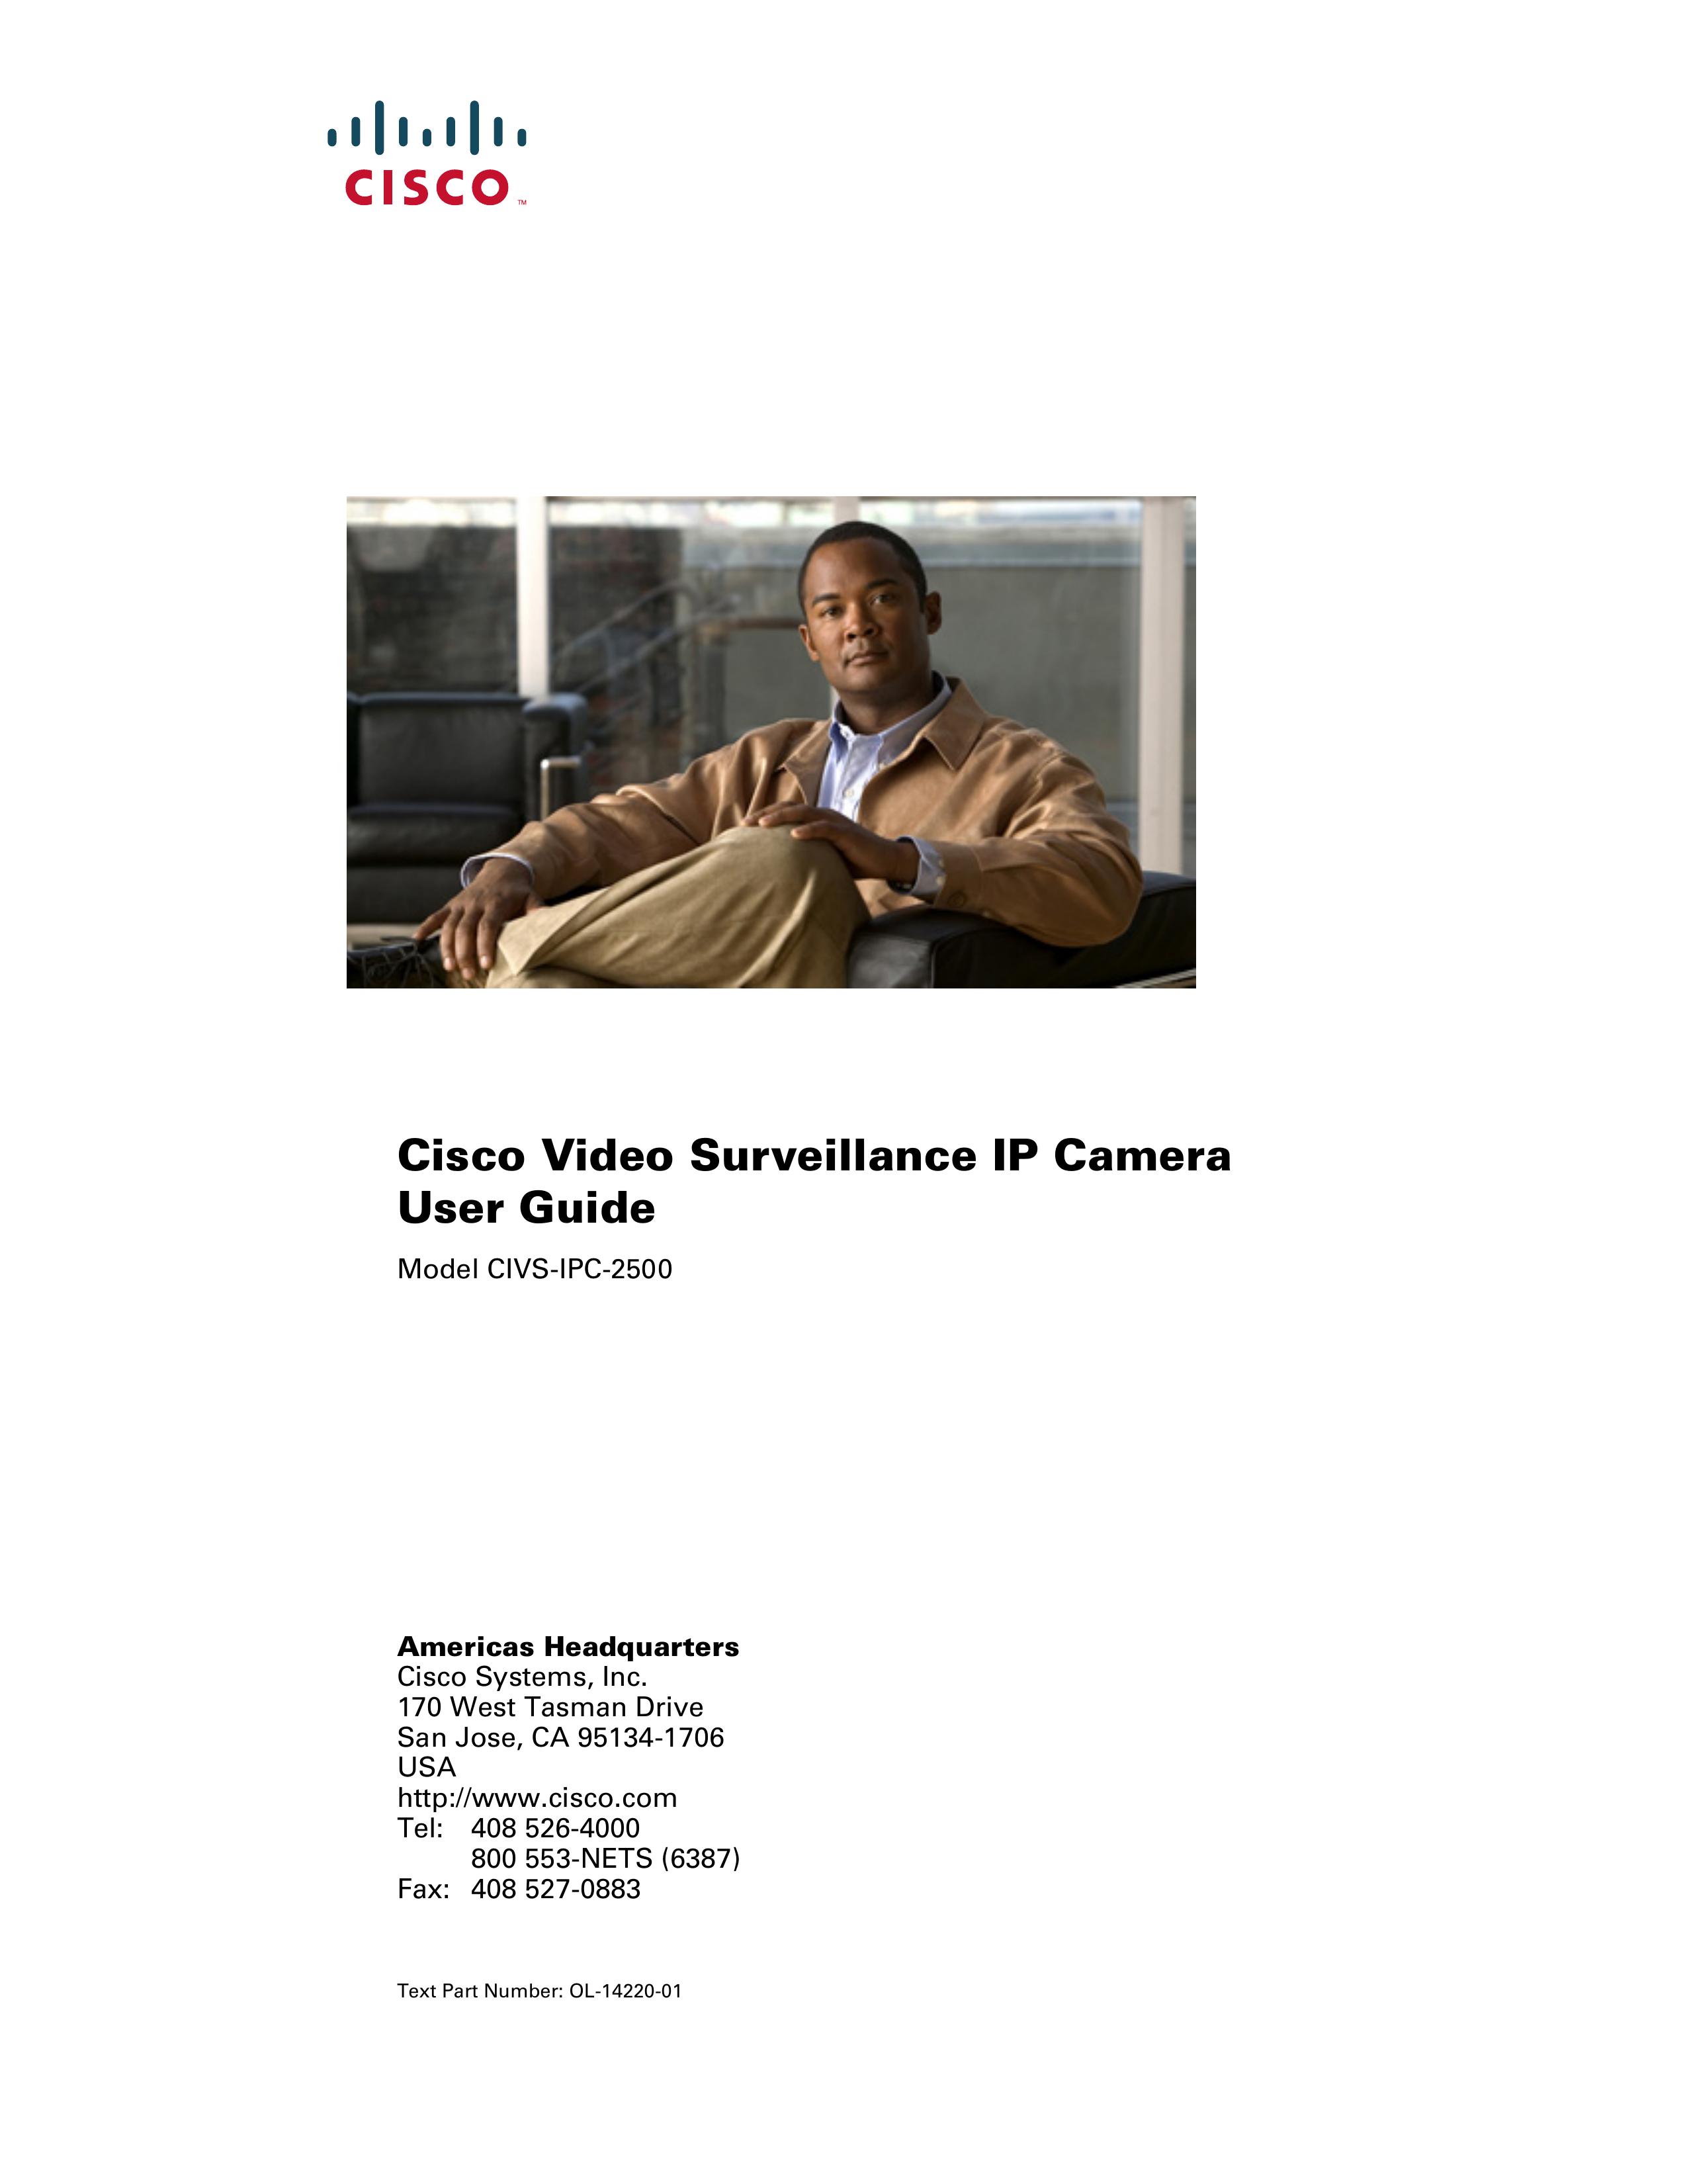 Cisco Systems CIVS-IPC-2500 Security Camera User Manual